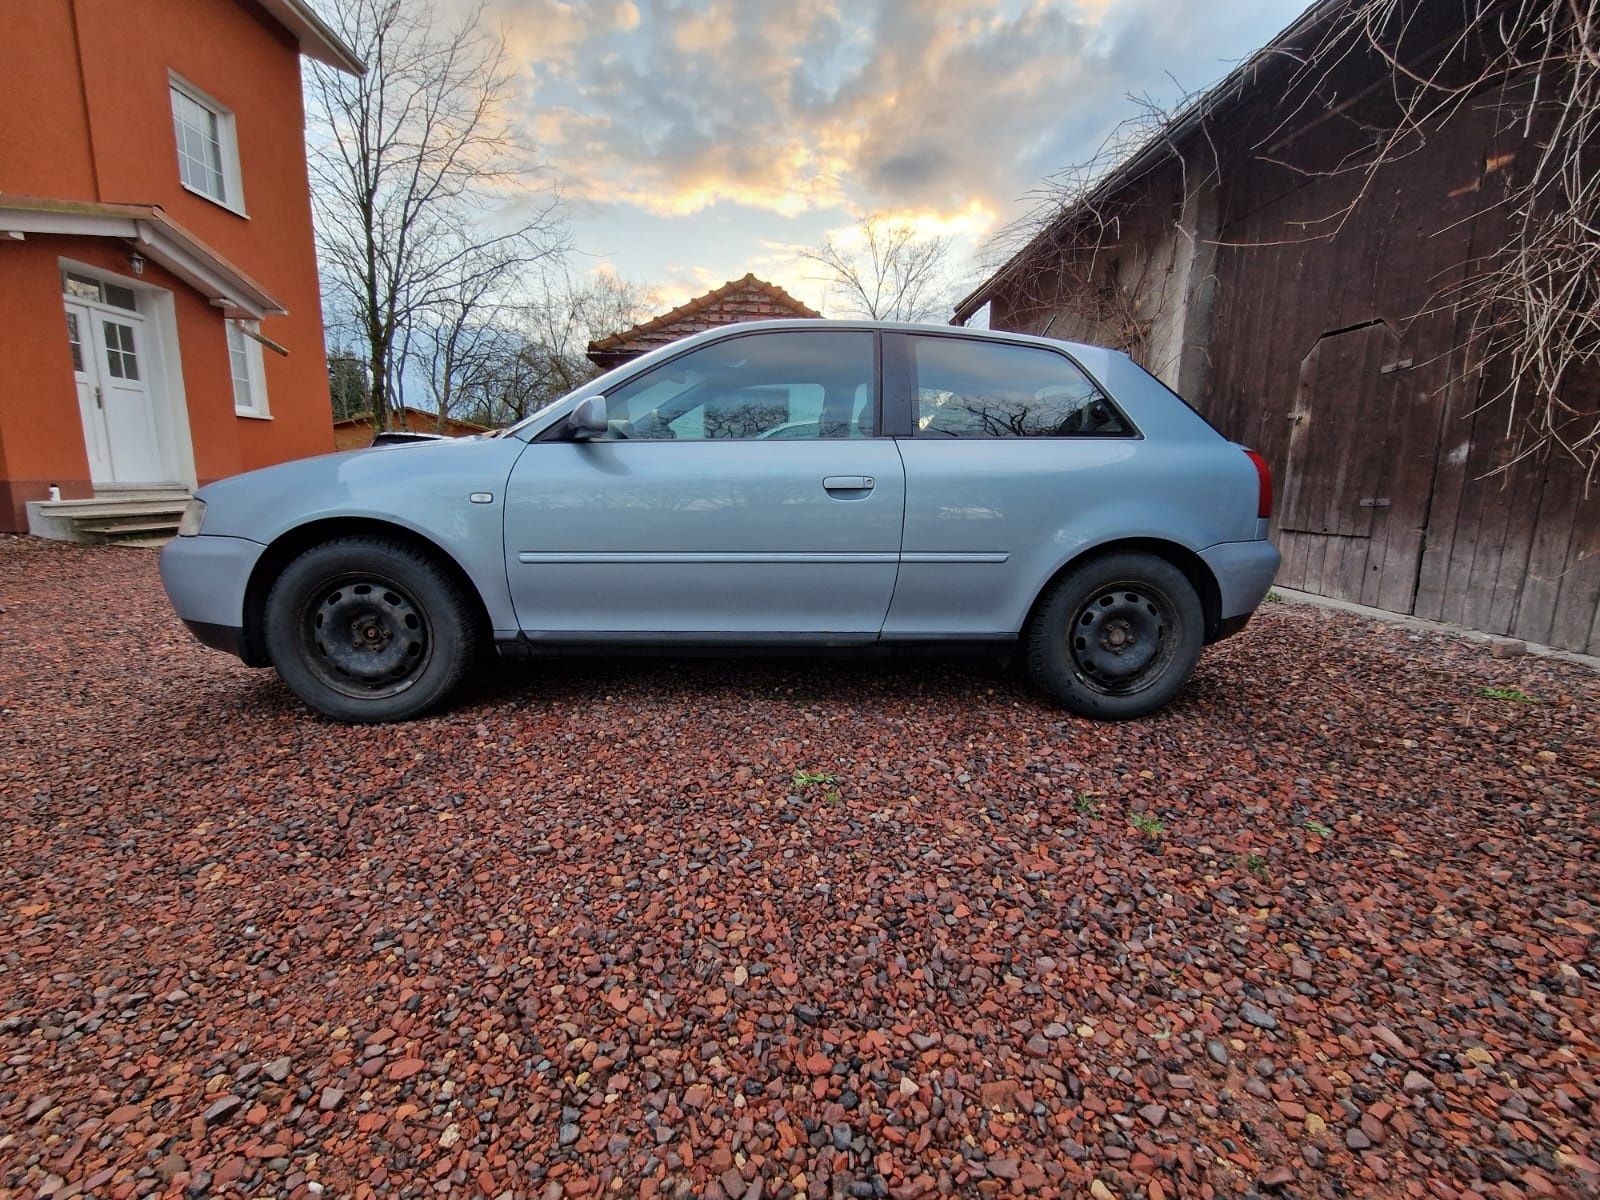 Audi A3 1.6 benzyna